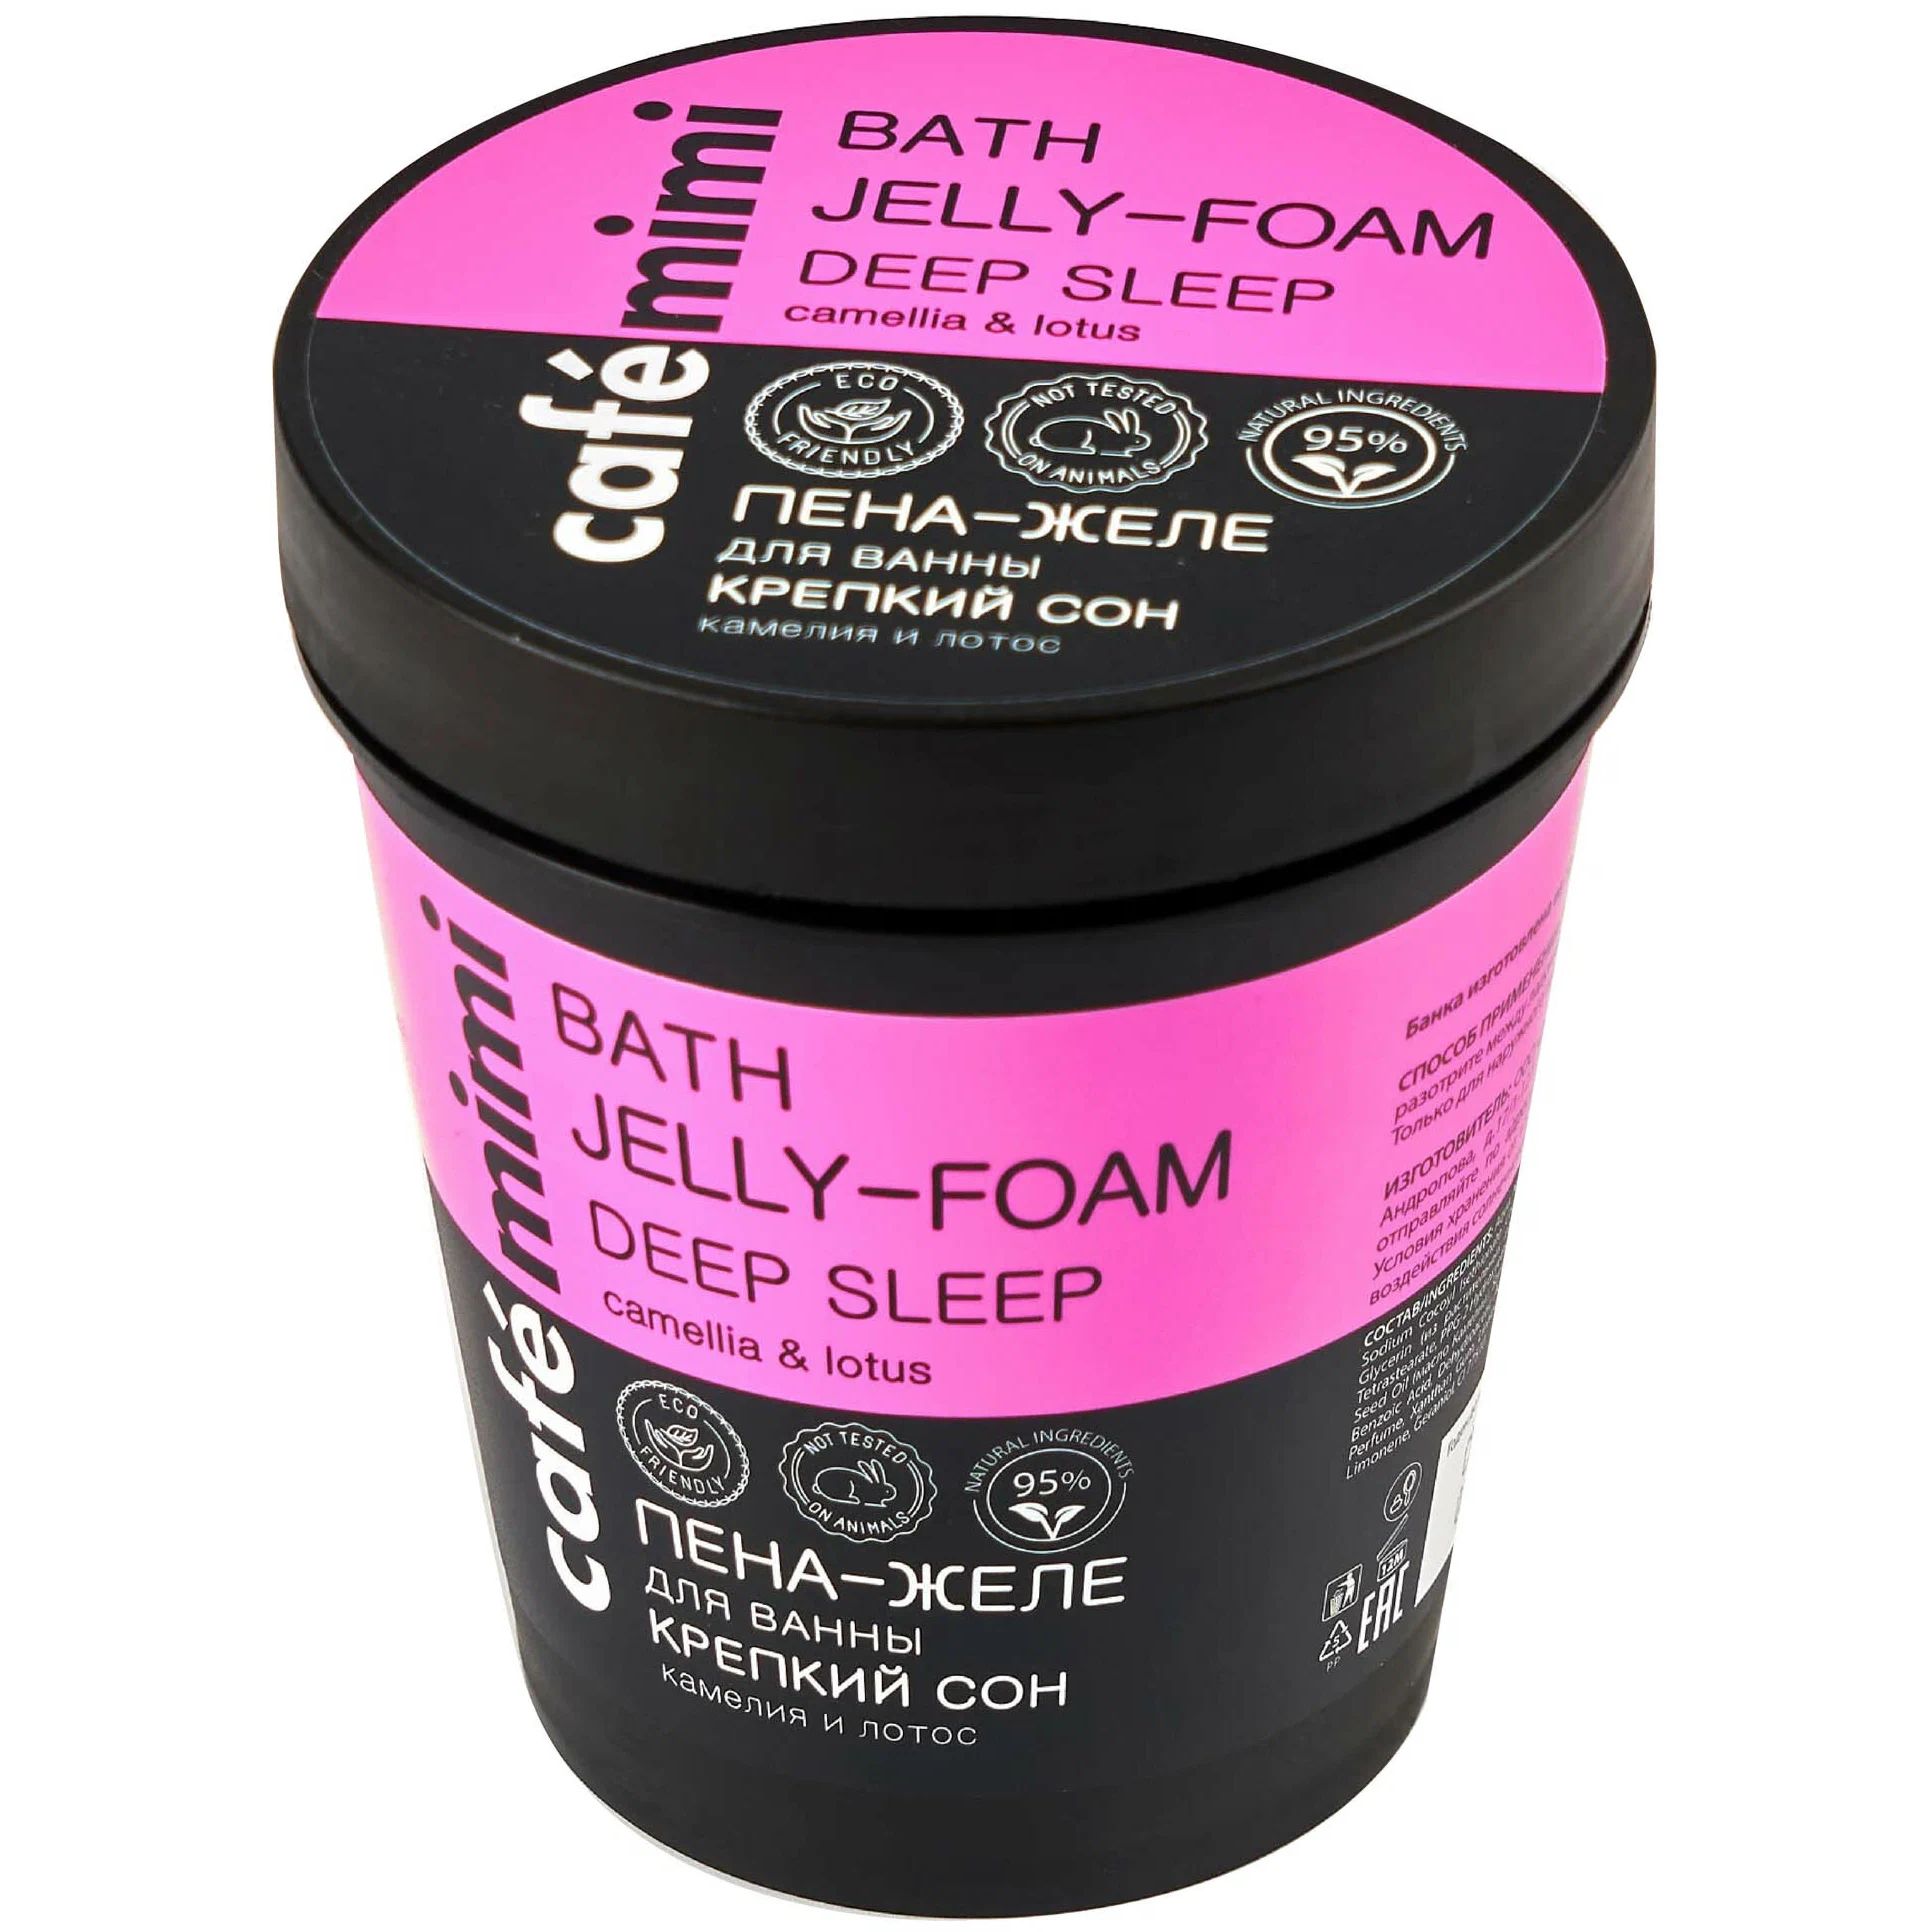 Пена-желе для ванны Cafe Mimi Bath Jelly-Foam Deep Sleep Крепкий сон релакс-эффект, 220 мл пена для ванн cafe mimi bath jelly foam antistress verbena